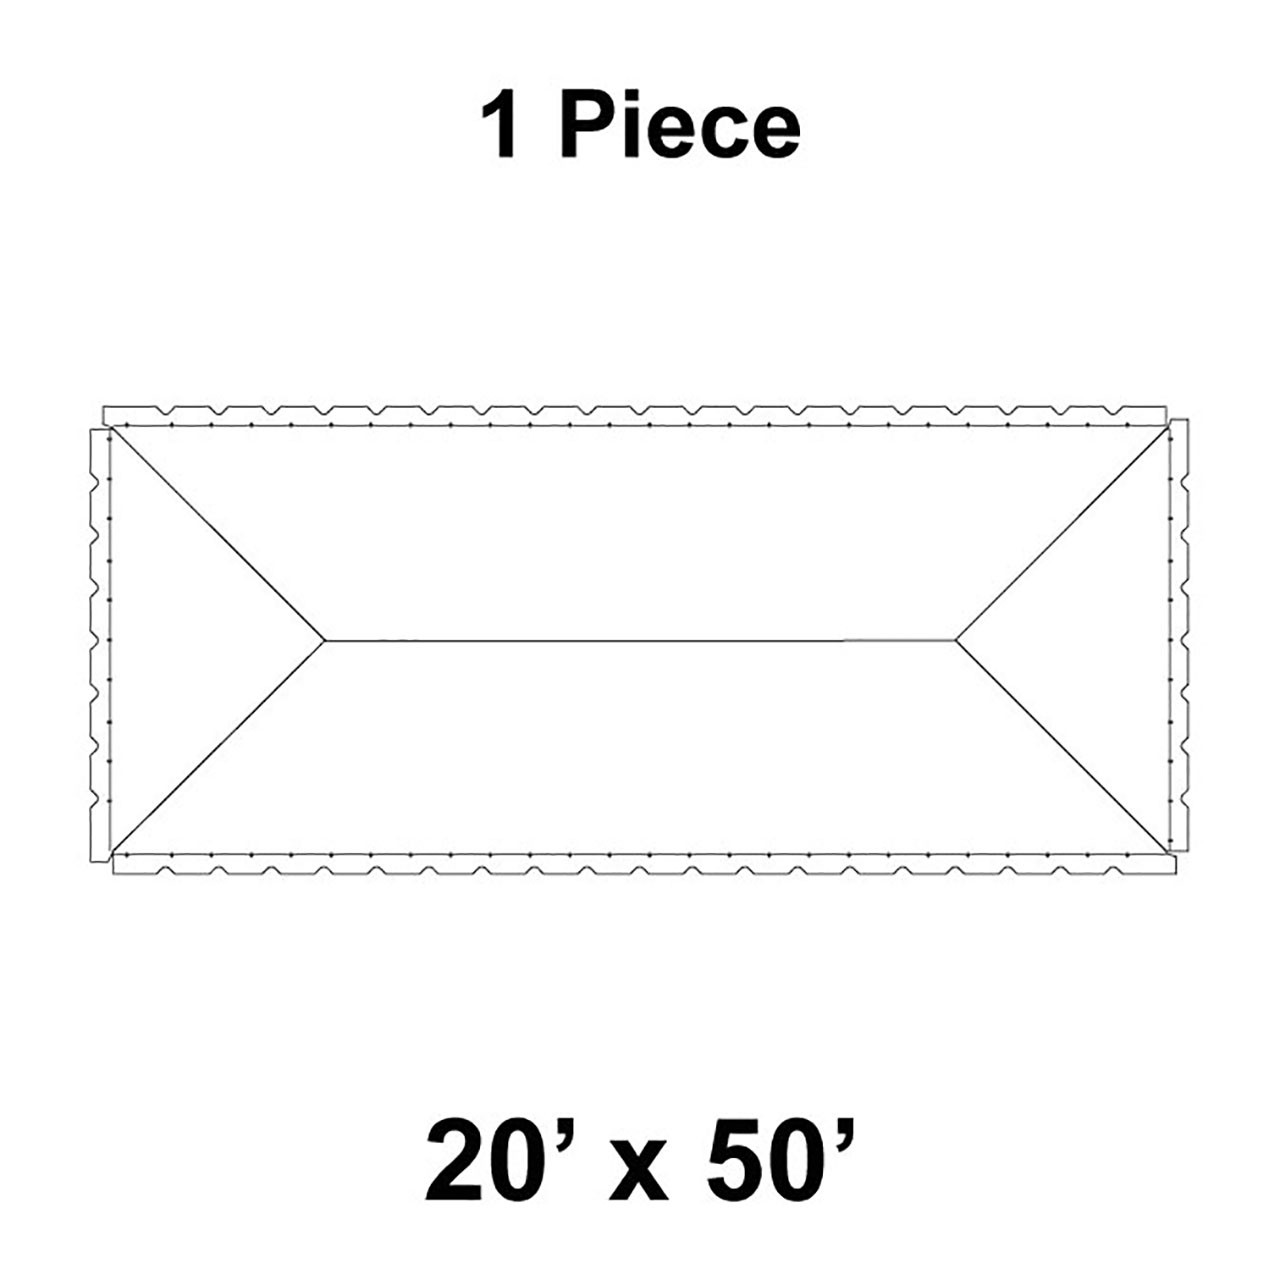 20' x 50' Classic Frame Tent, 1 Piece, 16 oz. Ratchet Top